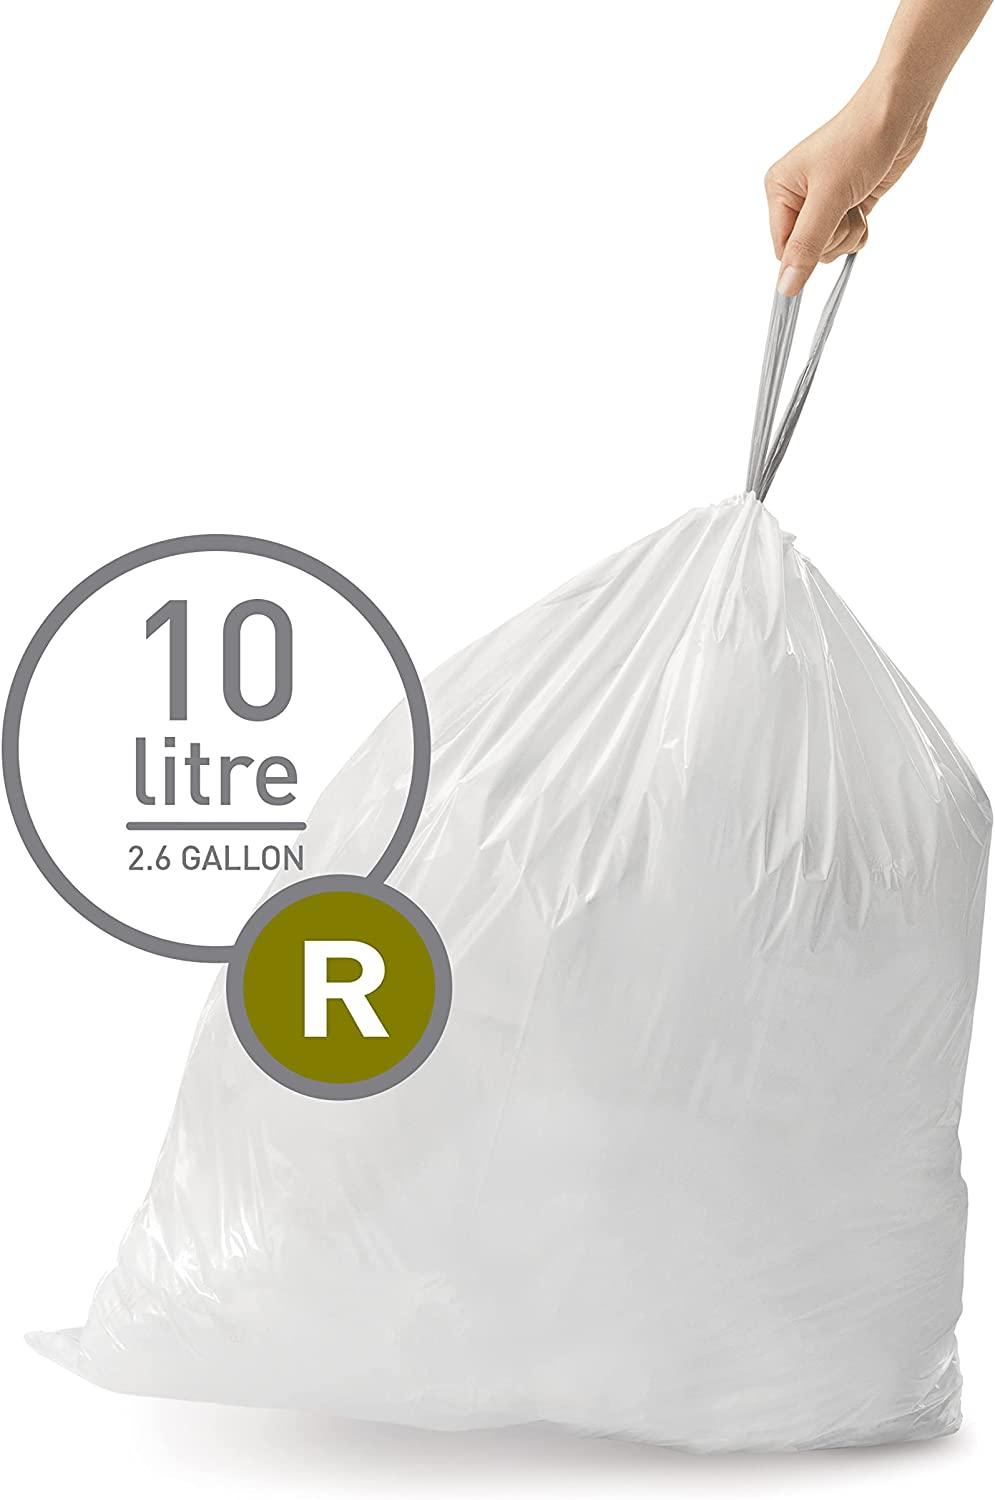 simplehuman Code R Custom Fit Drawstring Trash Bags in Dispenser Packs, 60  Count, 10 Liter / 2.6 Gallon, White 60 Liners Trash Bags